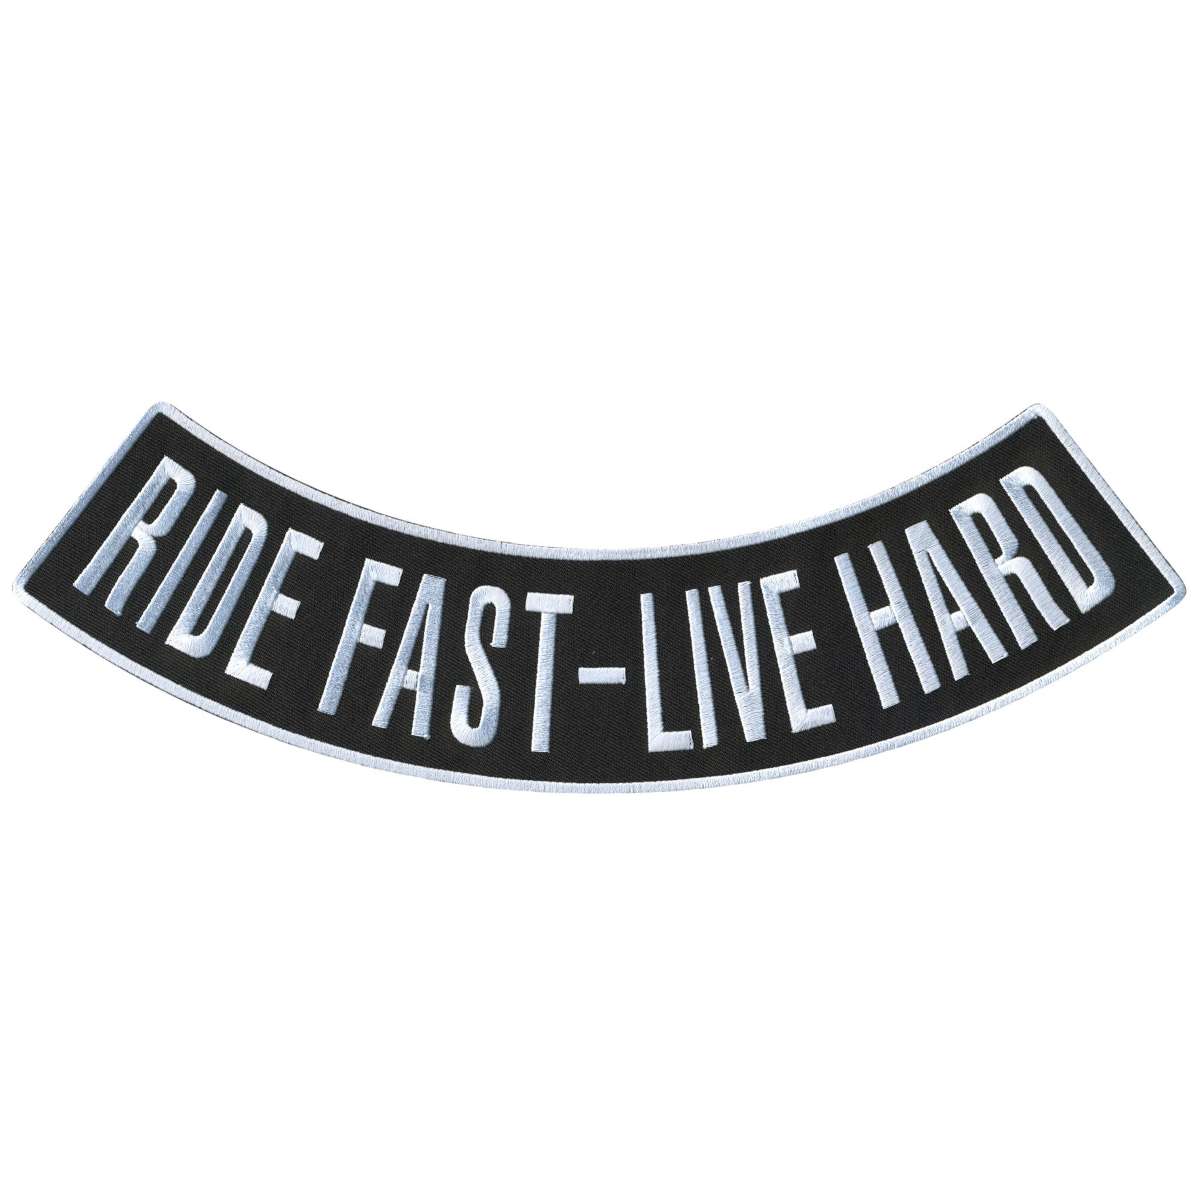 Hot Leathers Ride Fast - Live Hard 12” X 3” Bottom Rocker Patch PPM5203